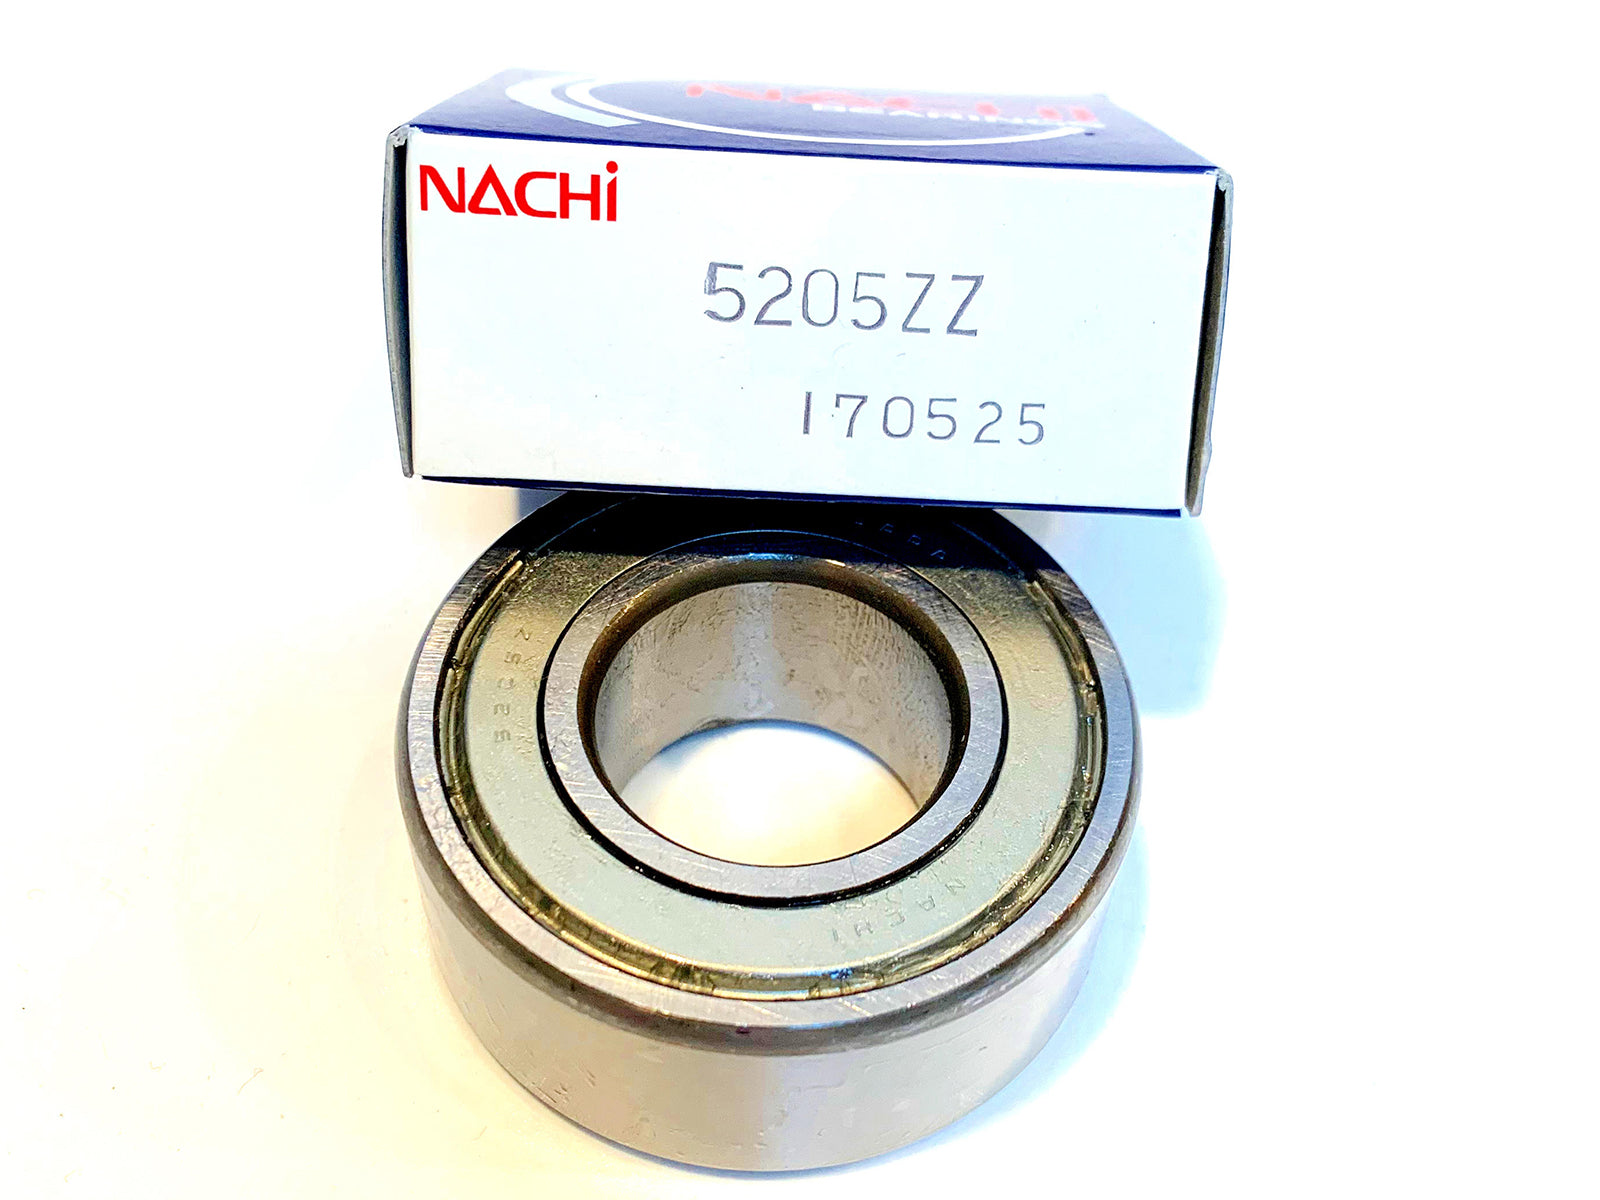 5205-ZZ NACHI Ball Bearing - ppdistributors